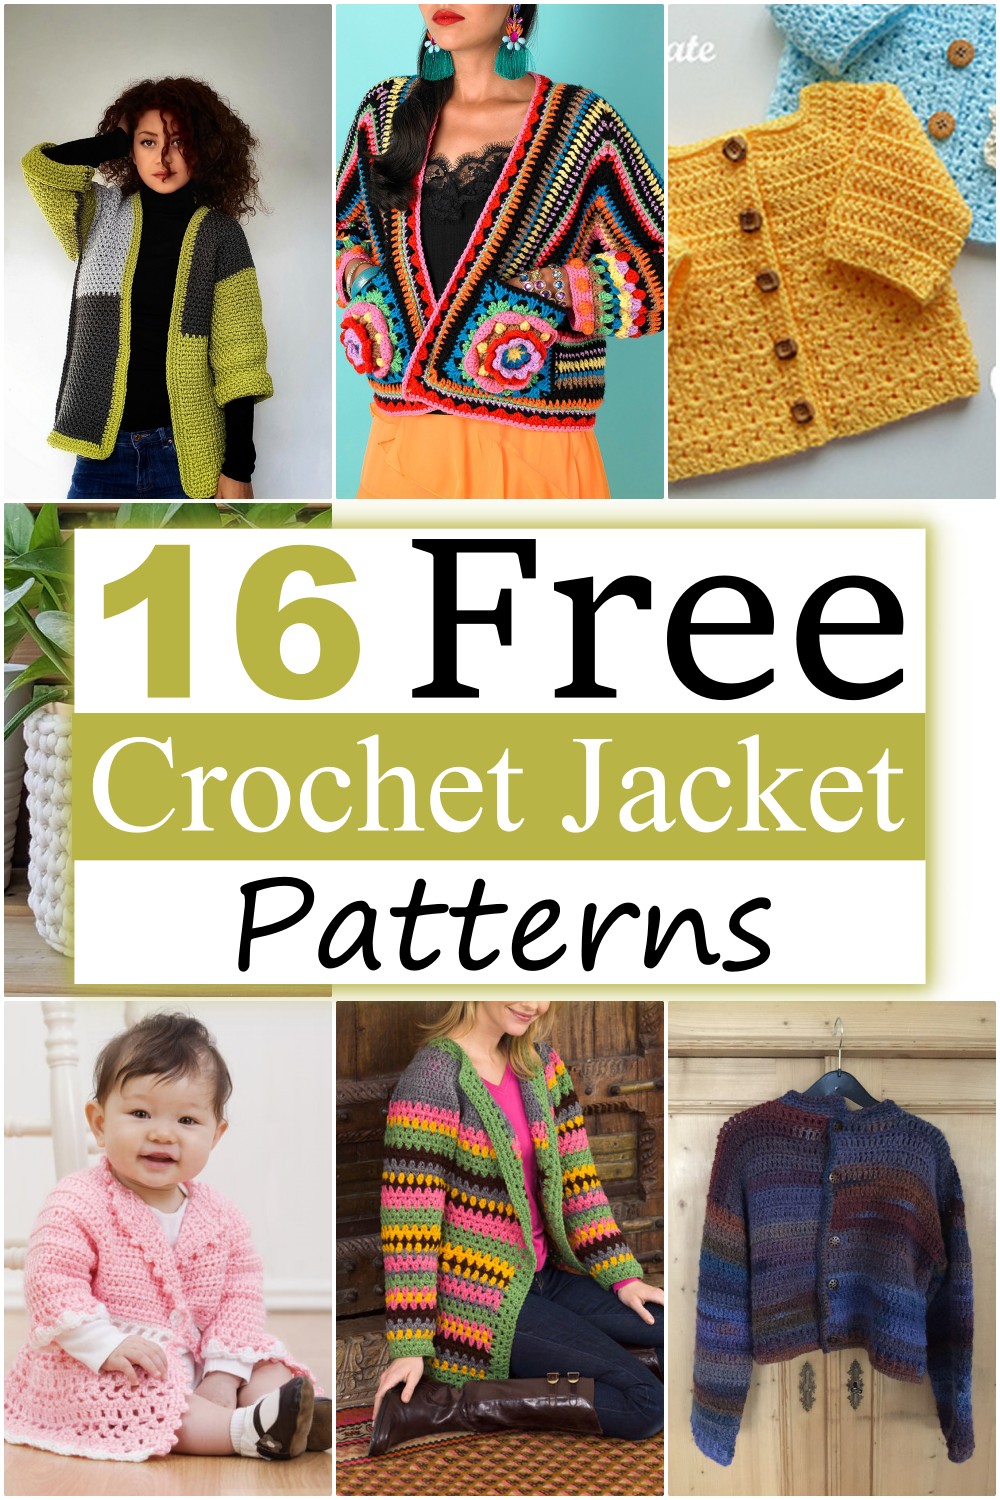 16 Free Crochet Jacket Patterns